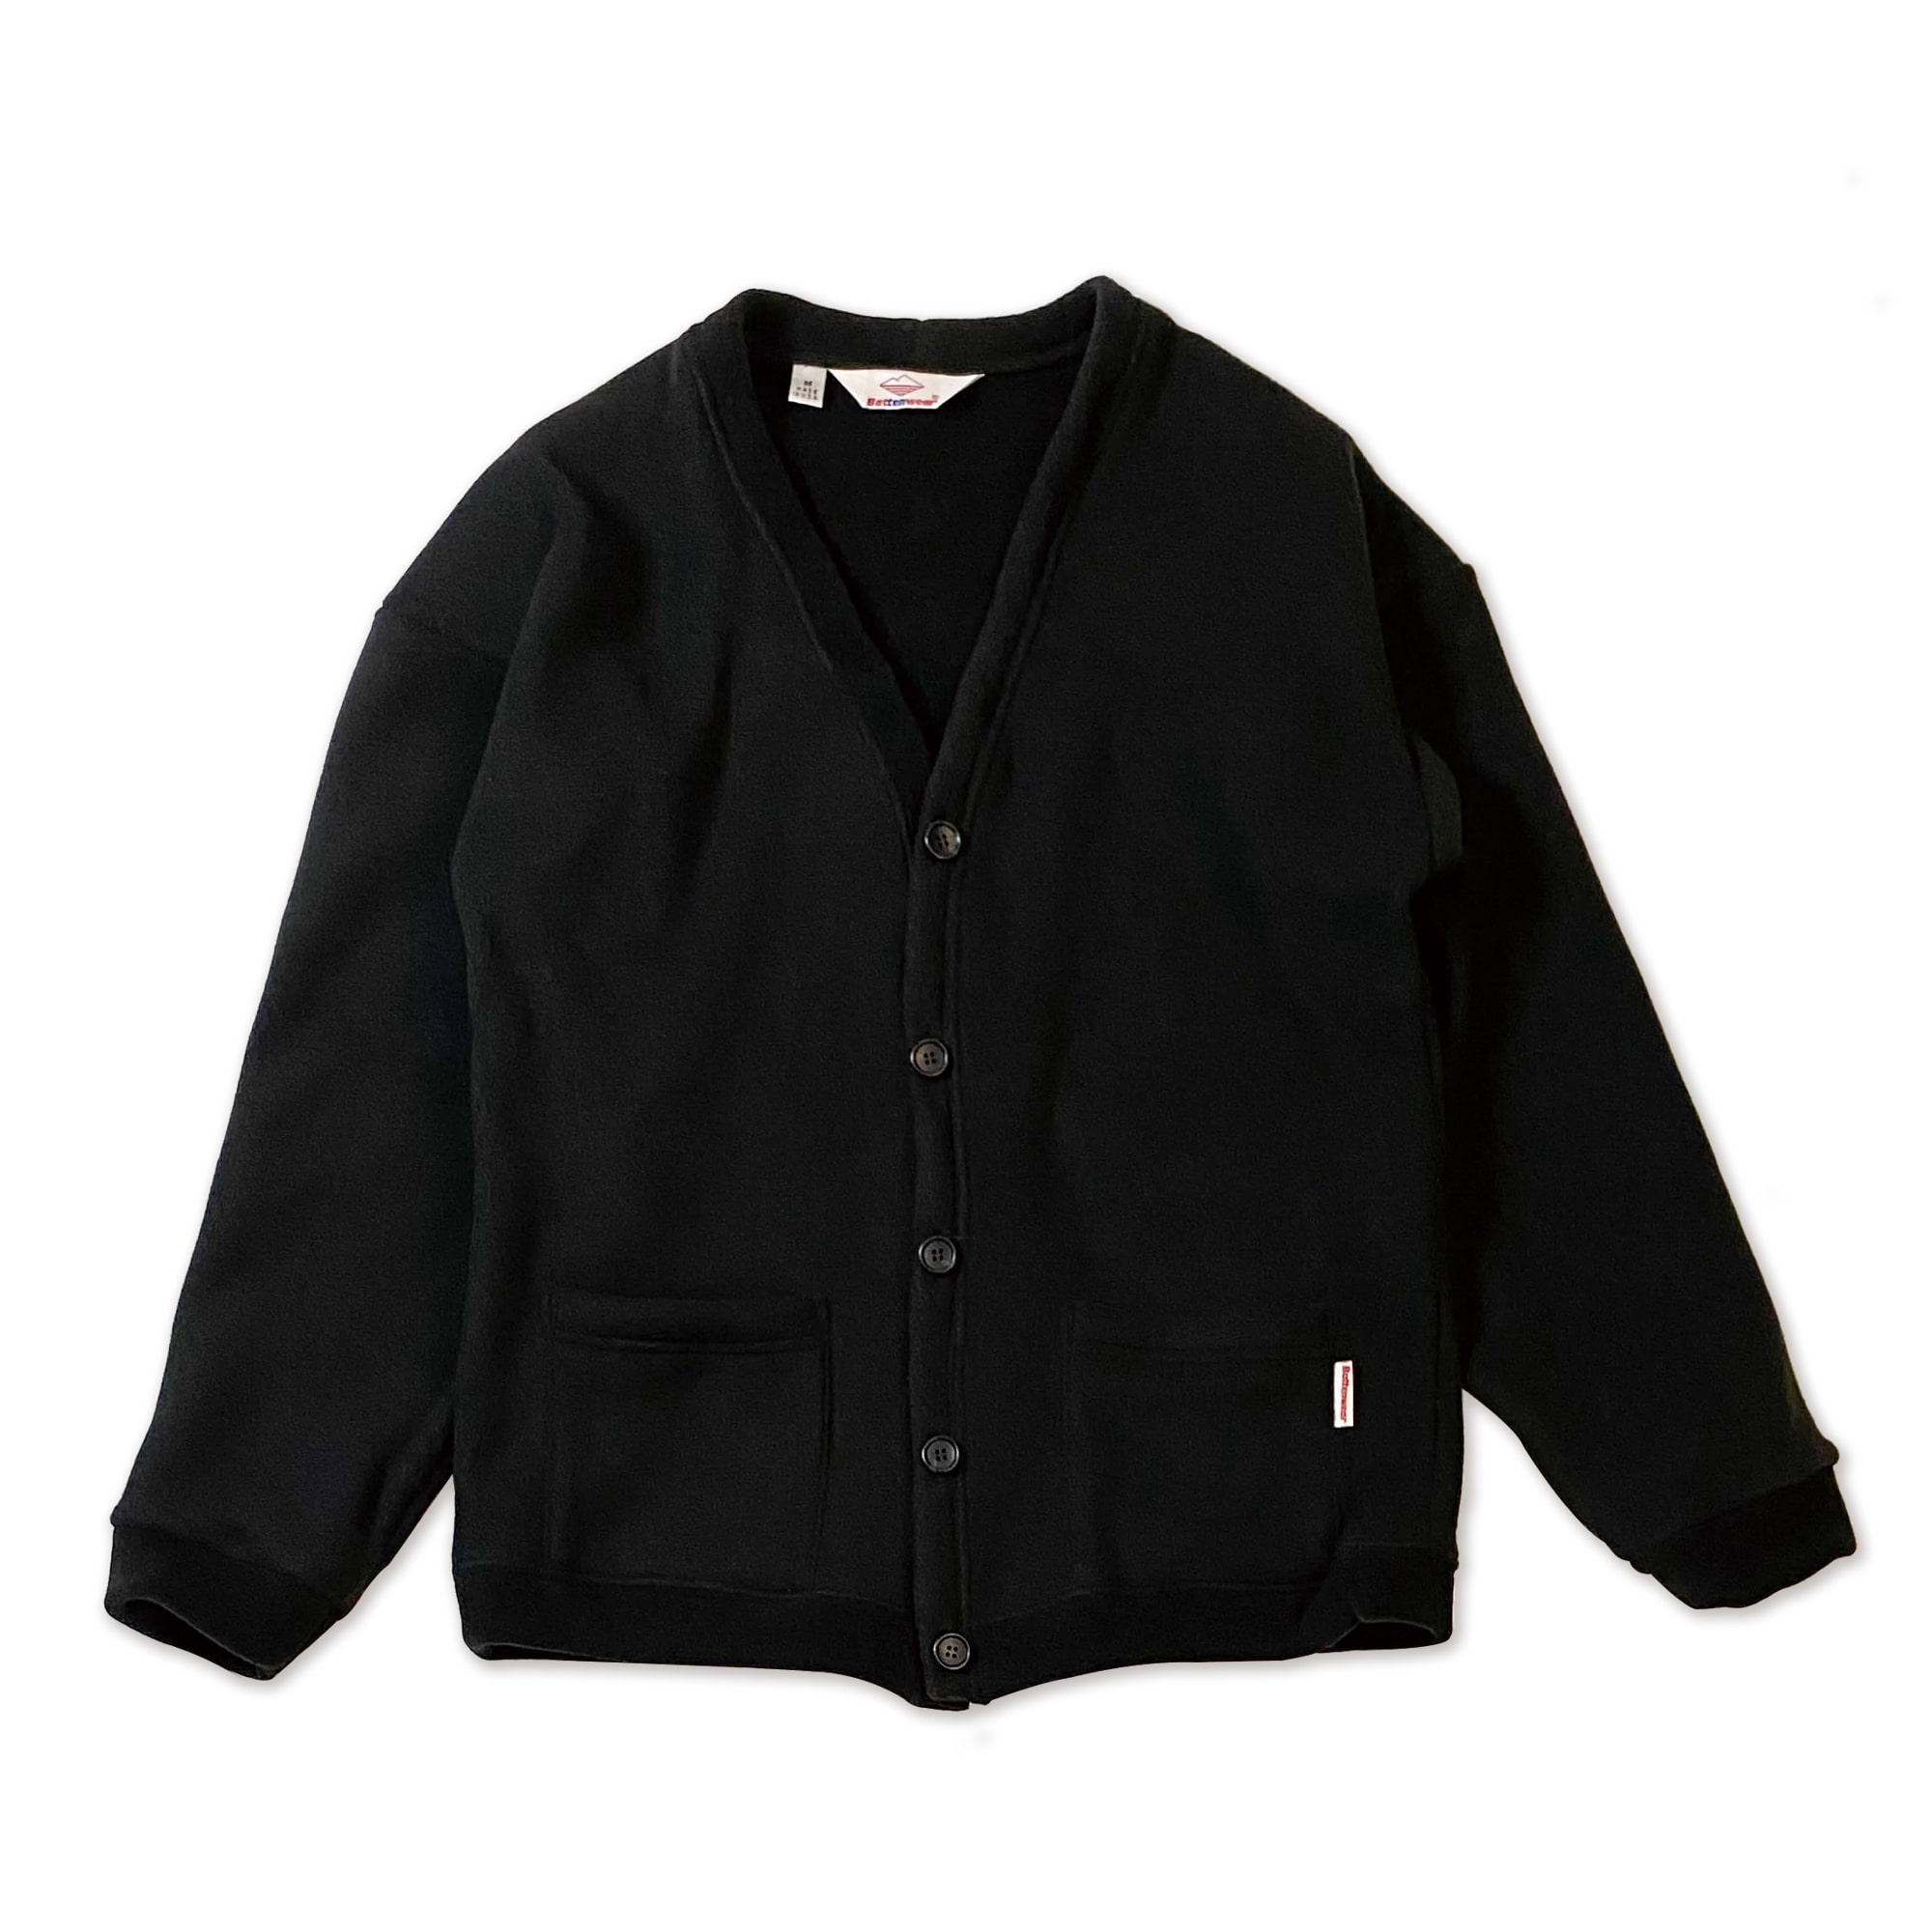 [Battenwear] Neighbor Cardigan (Black) (70% Sale)